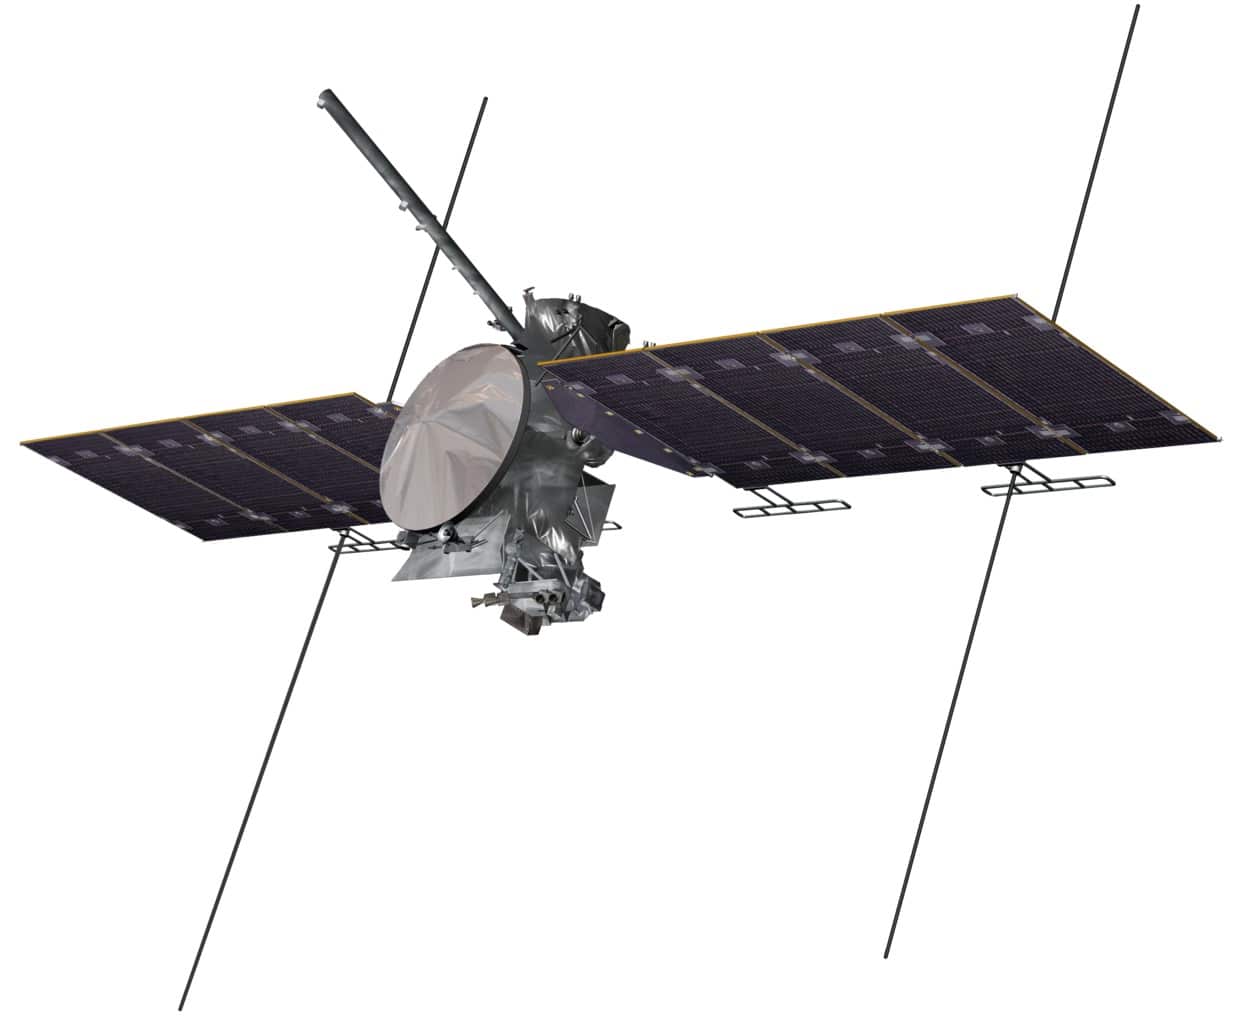 sonde spatiale europa clipper nasa